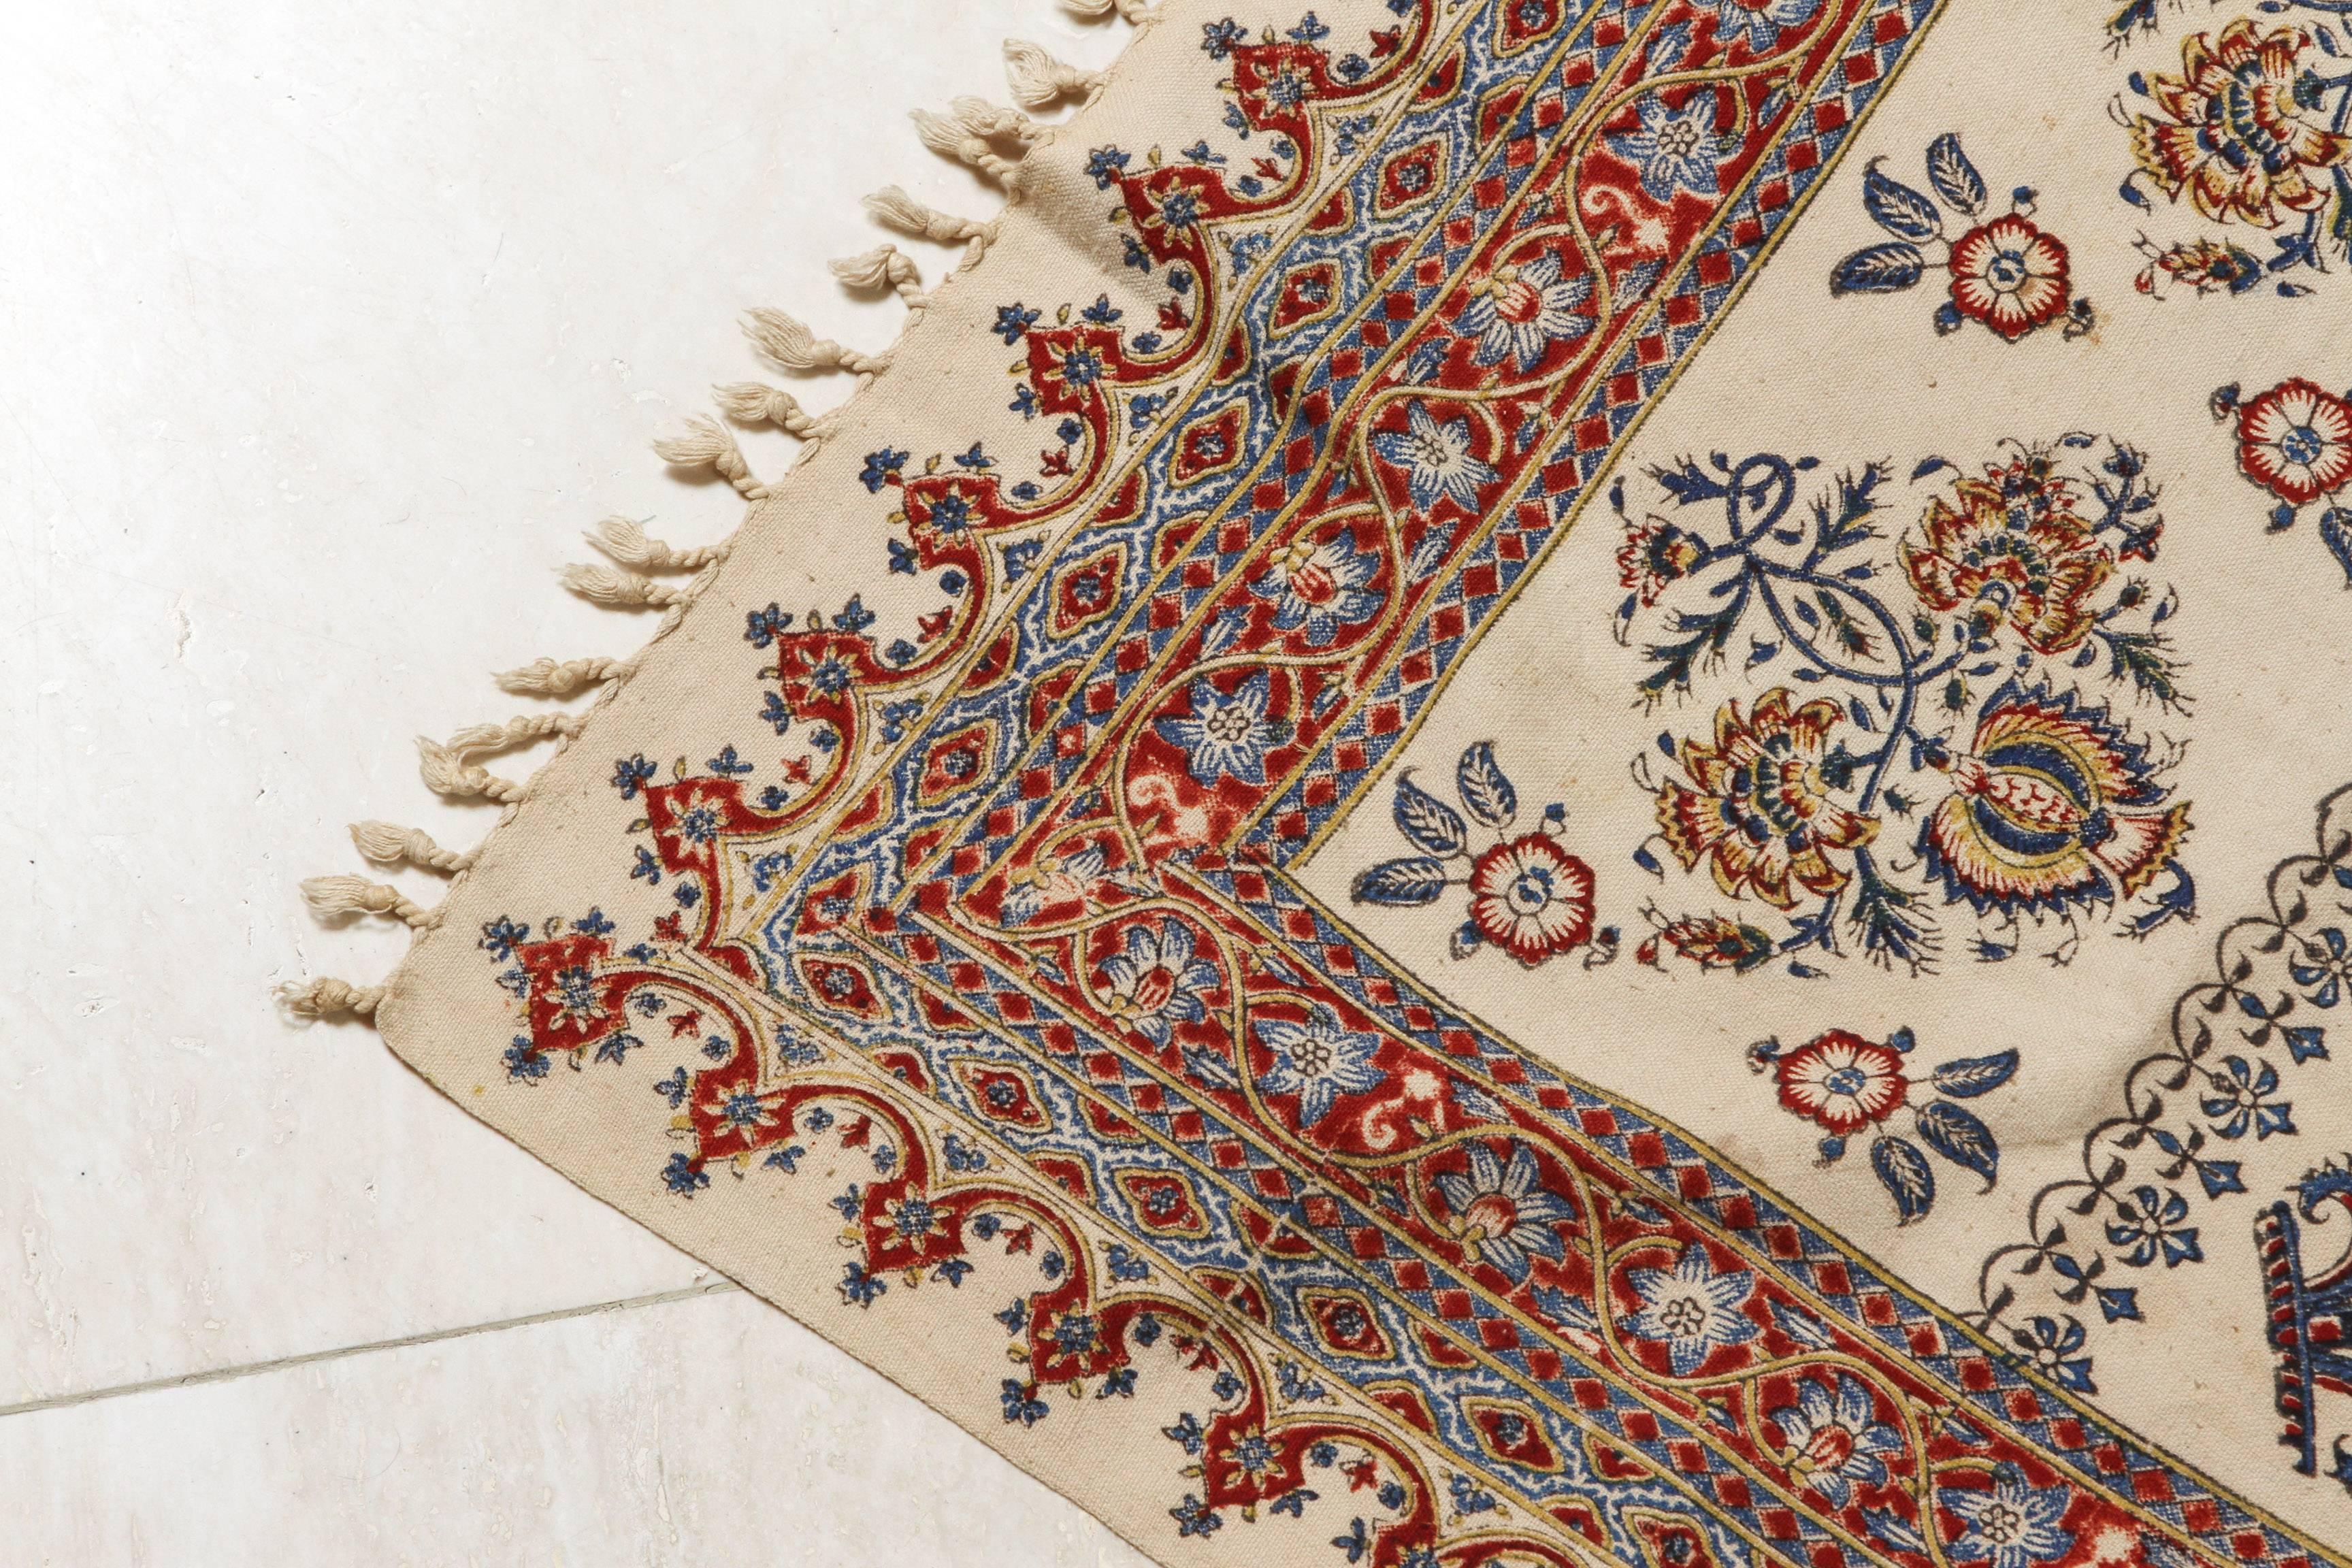 Indian Persian Paisley Woodblock Printed Textile